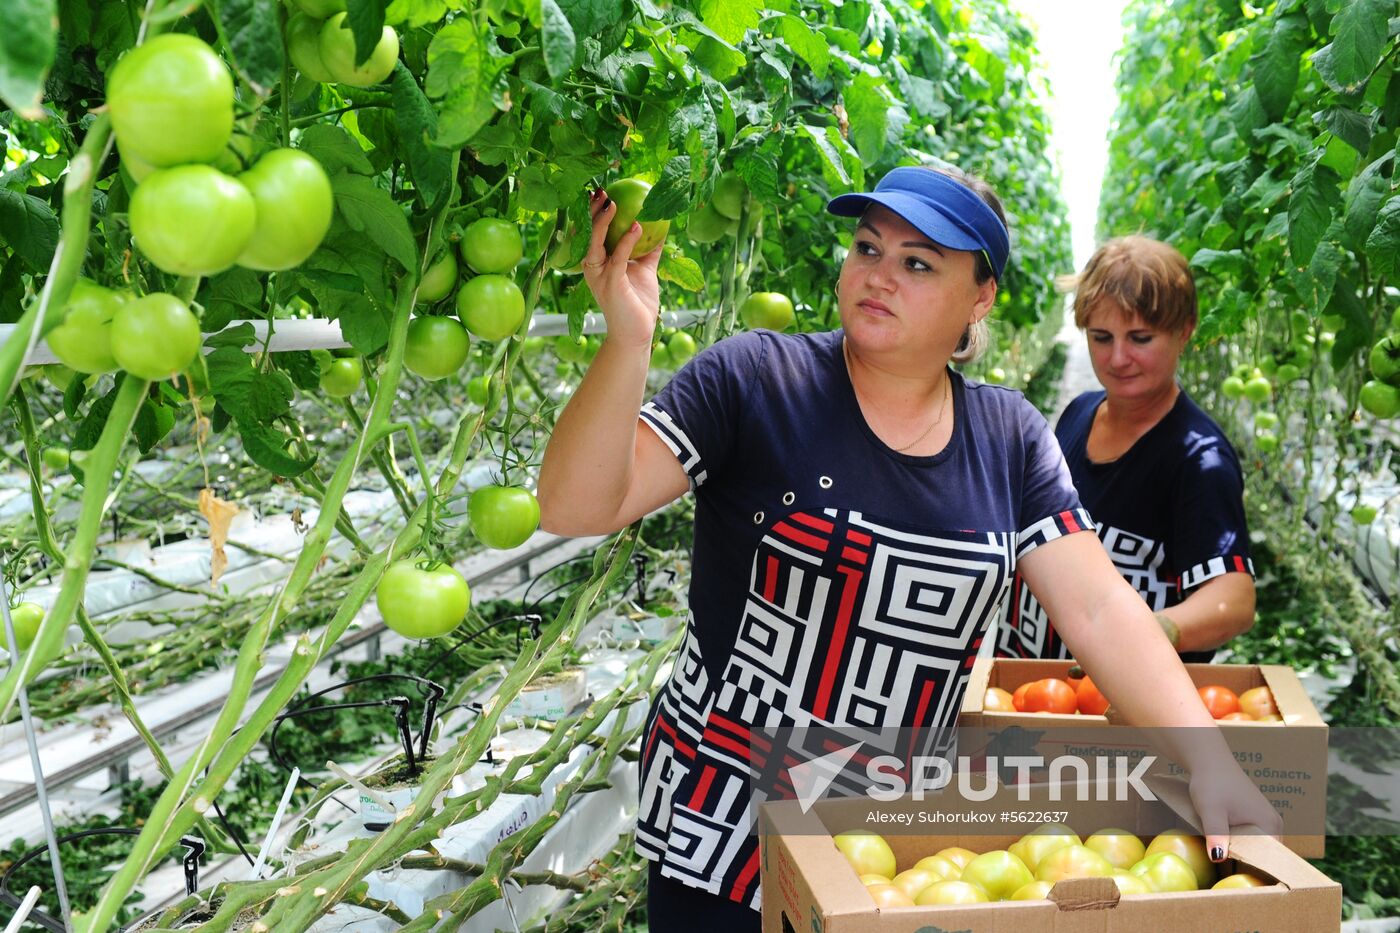 Greenhouse farm in Tambov Region